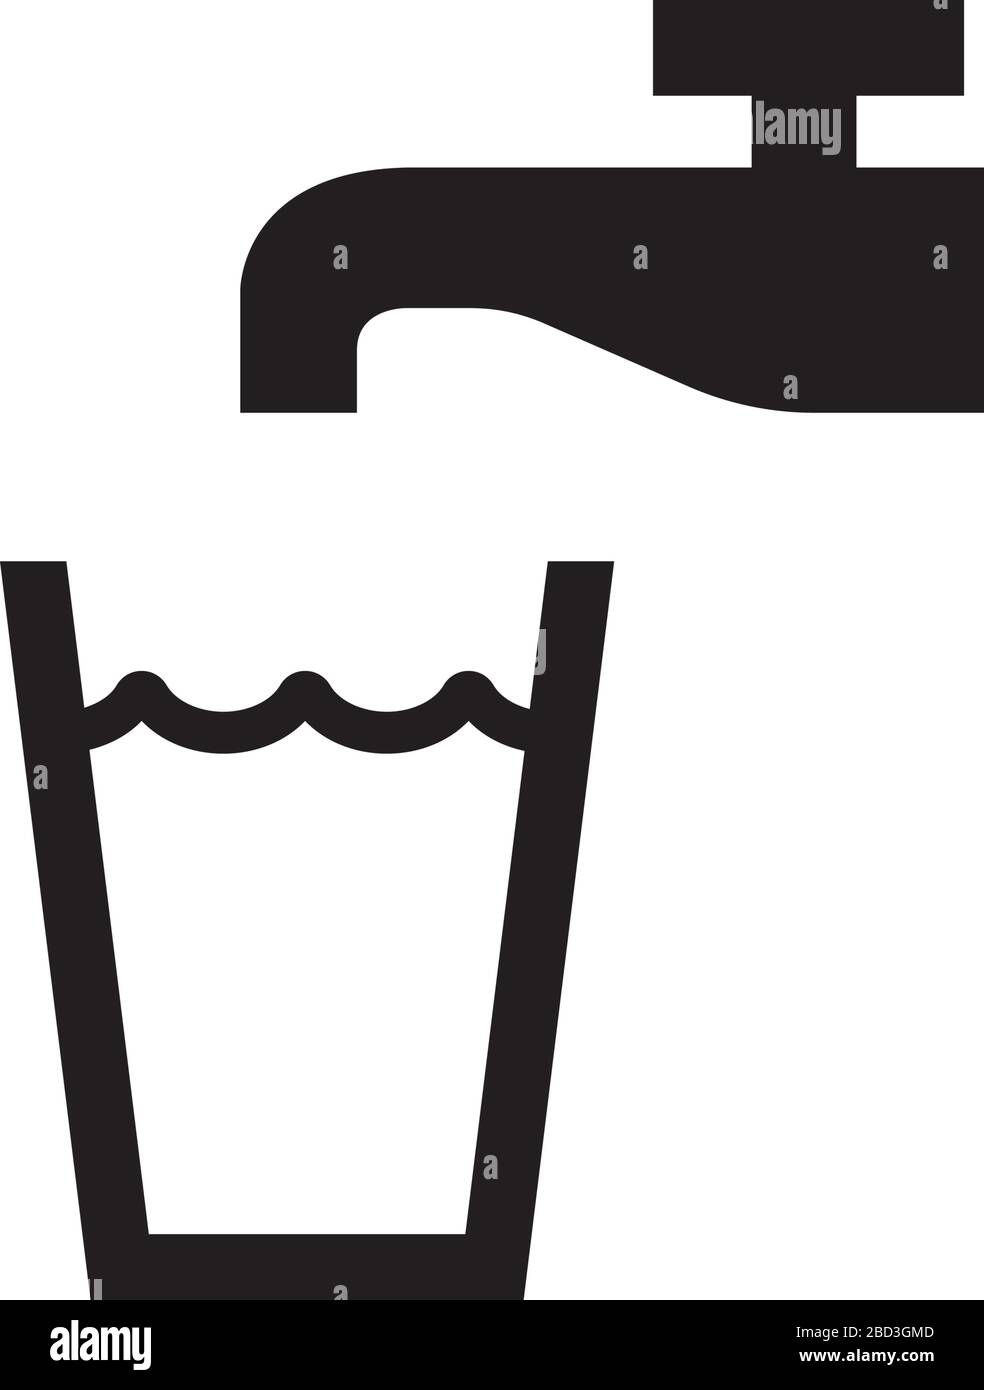 drinking water icon / public information symbol Stock Vector